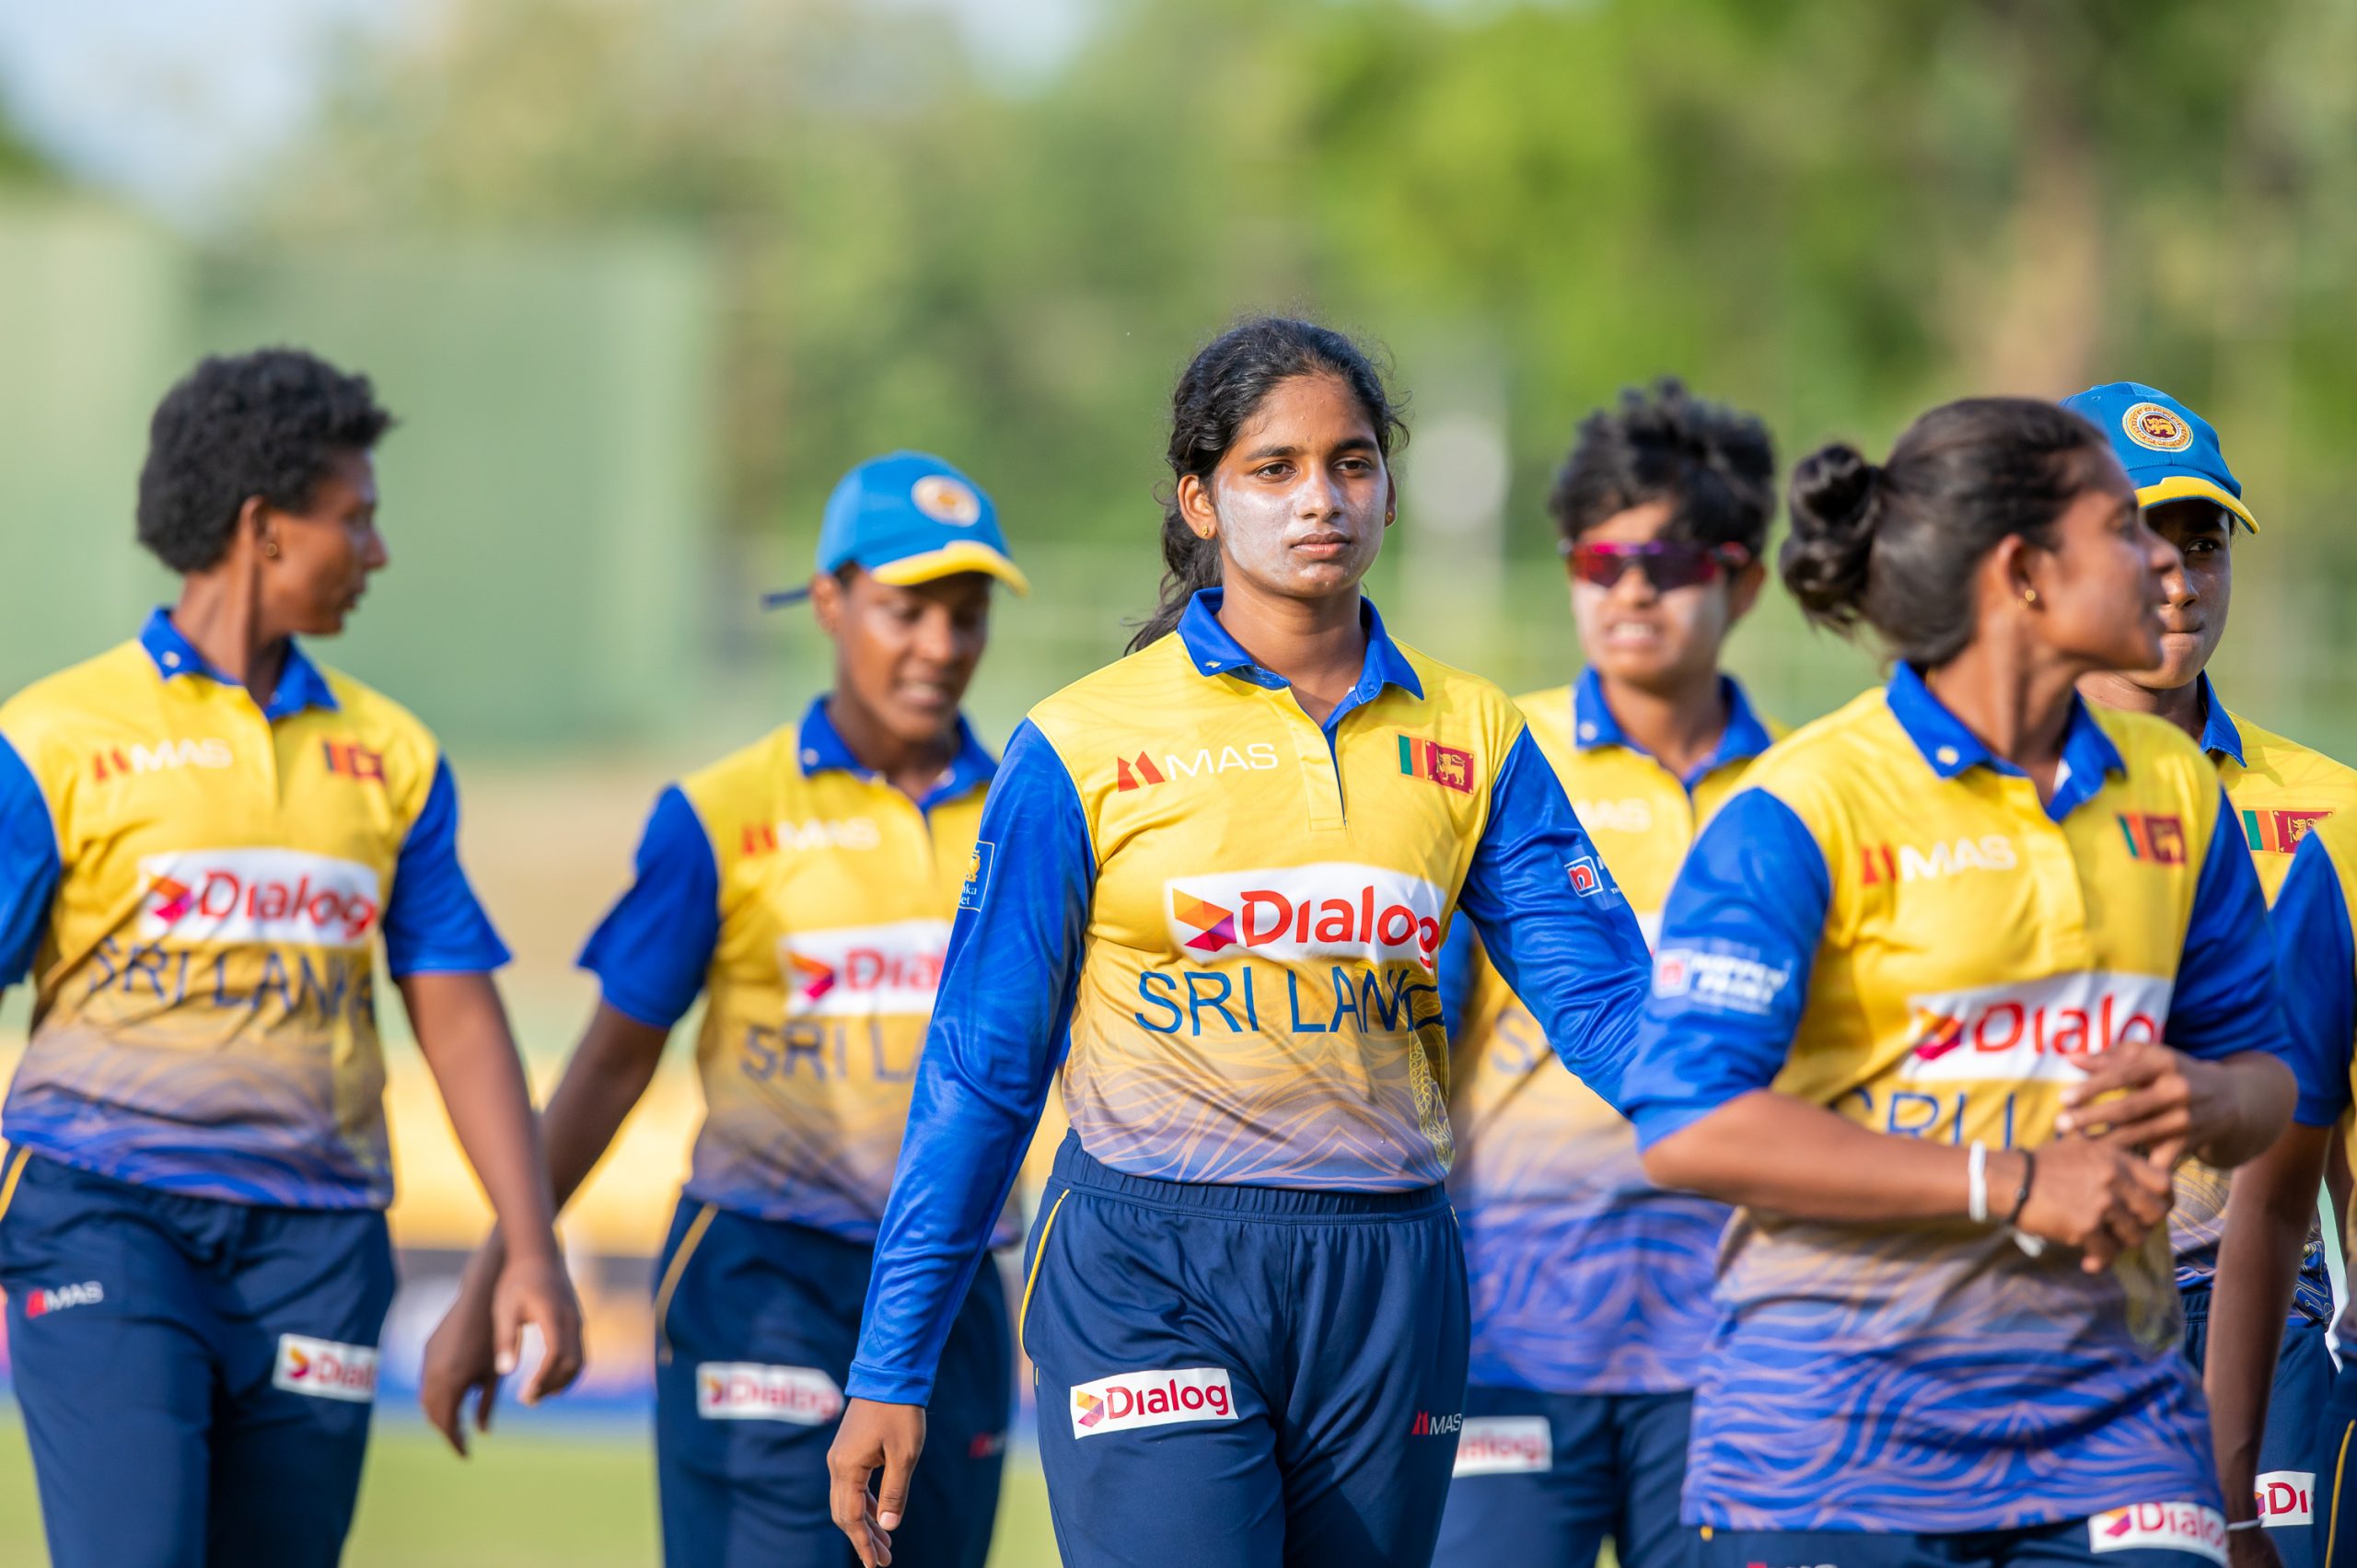 The victorious U19 Sri Lankan team. [Image: Getty]